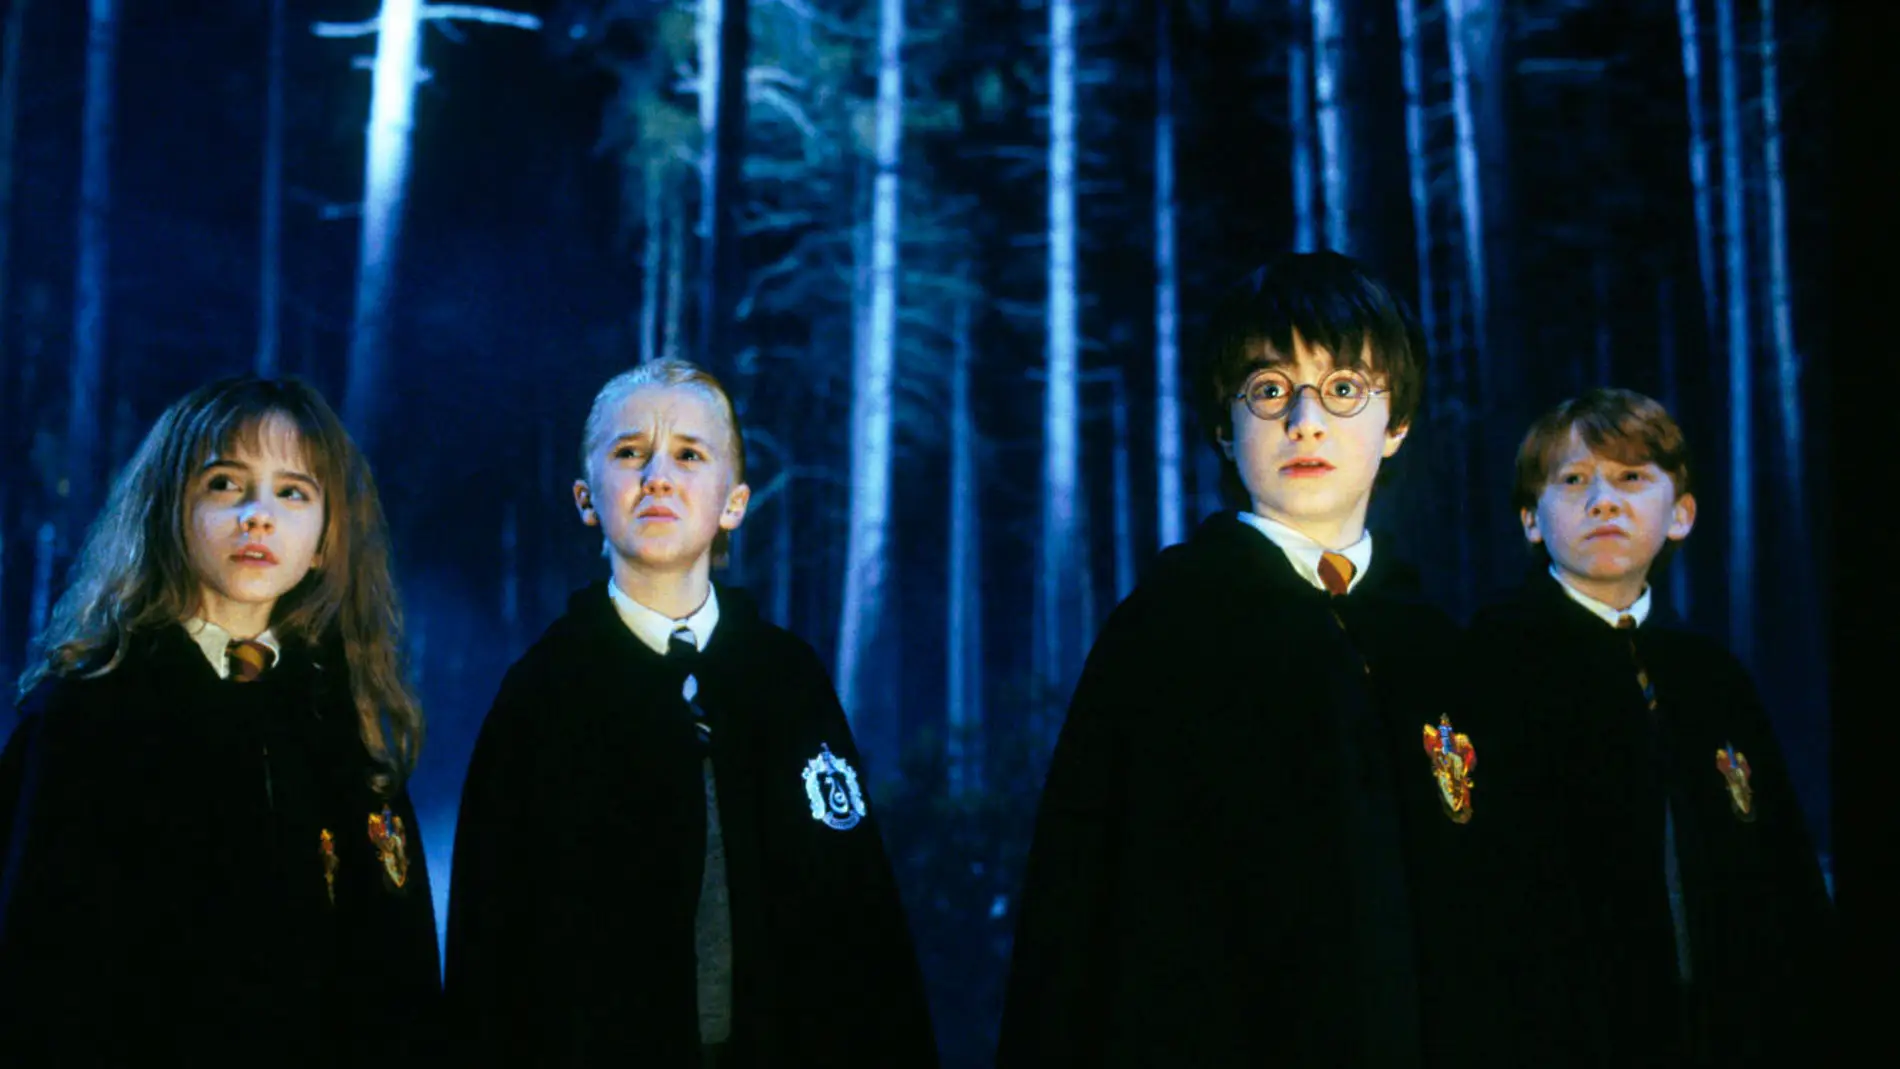 Hermione, Draco, Harry y Ron en 'Harry Potter'